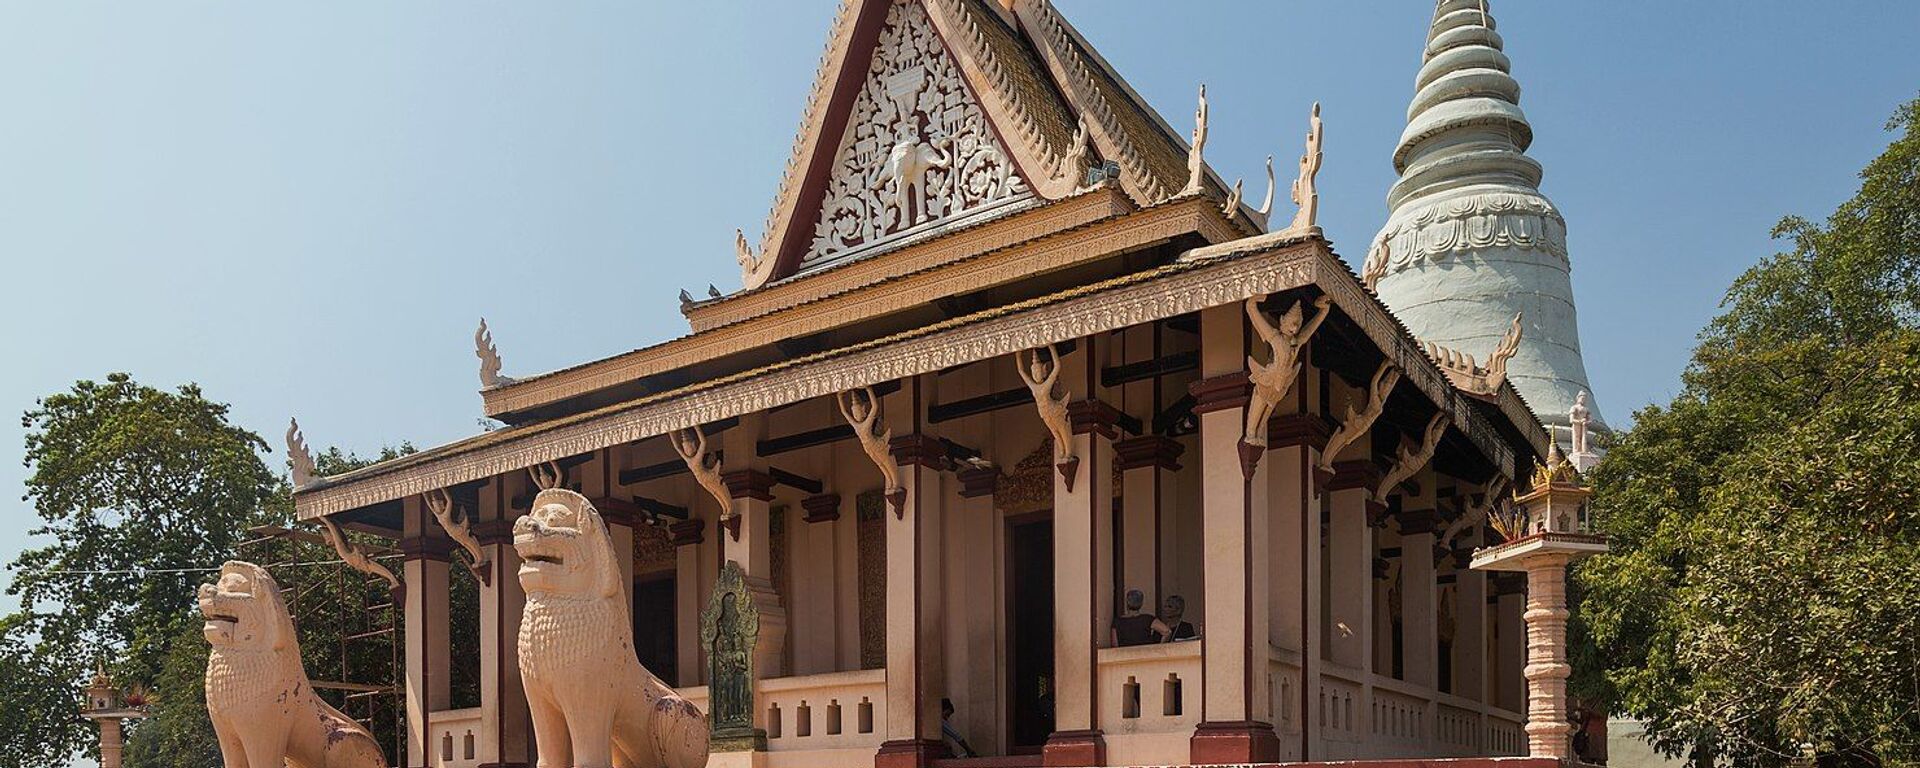 Chùa Wat Phnom - Sputnik Việt Nam, 1920, 23.12.2021